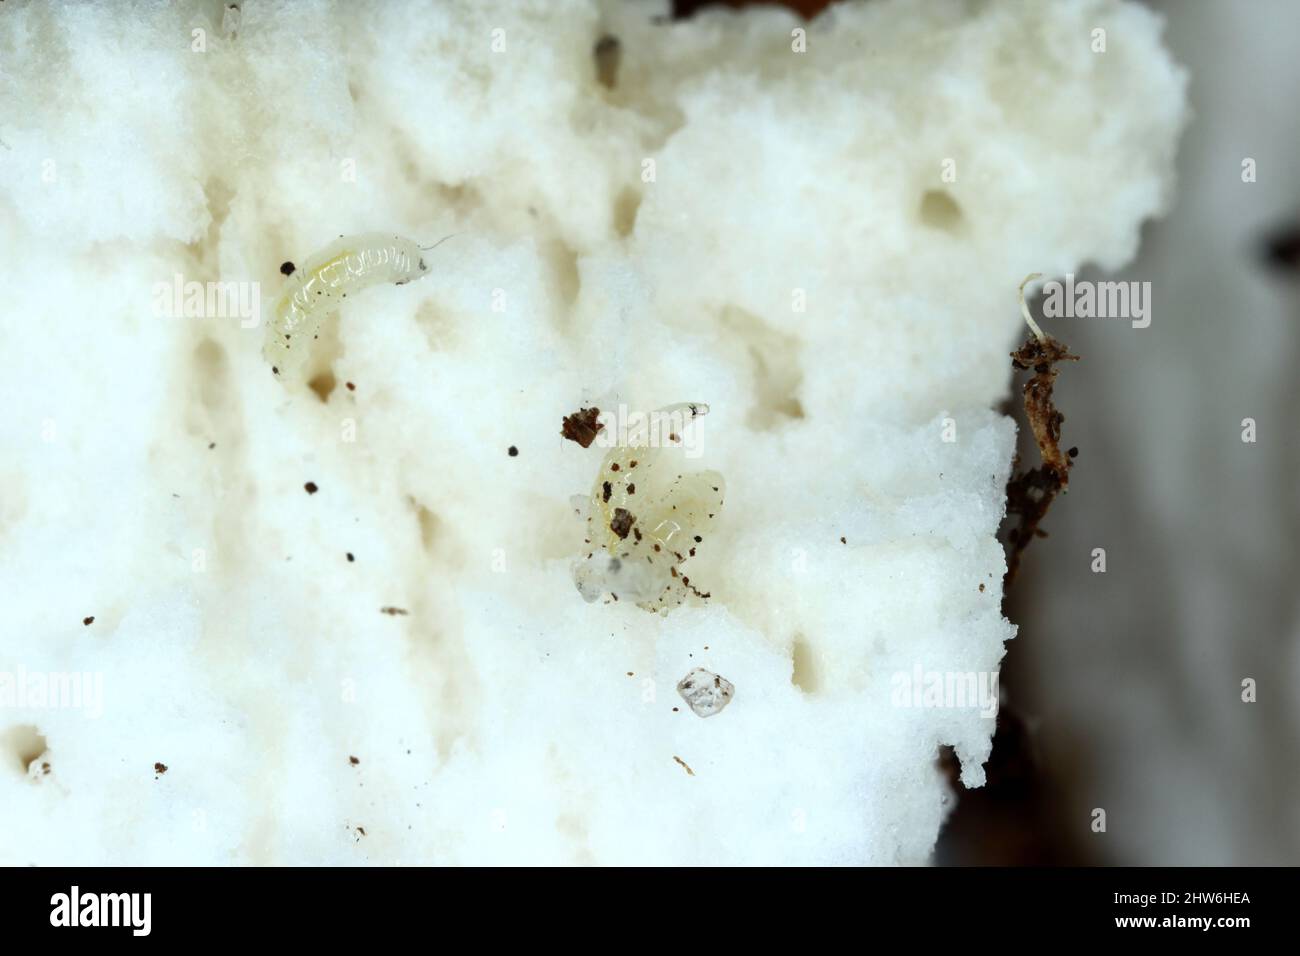 Fly larvae (maggots) in a mushroom. A wormy mushroom. Stock Photo